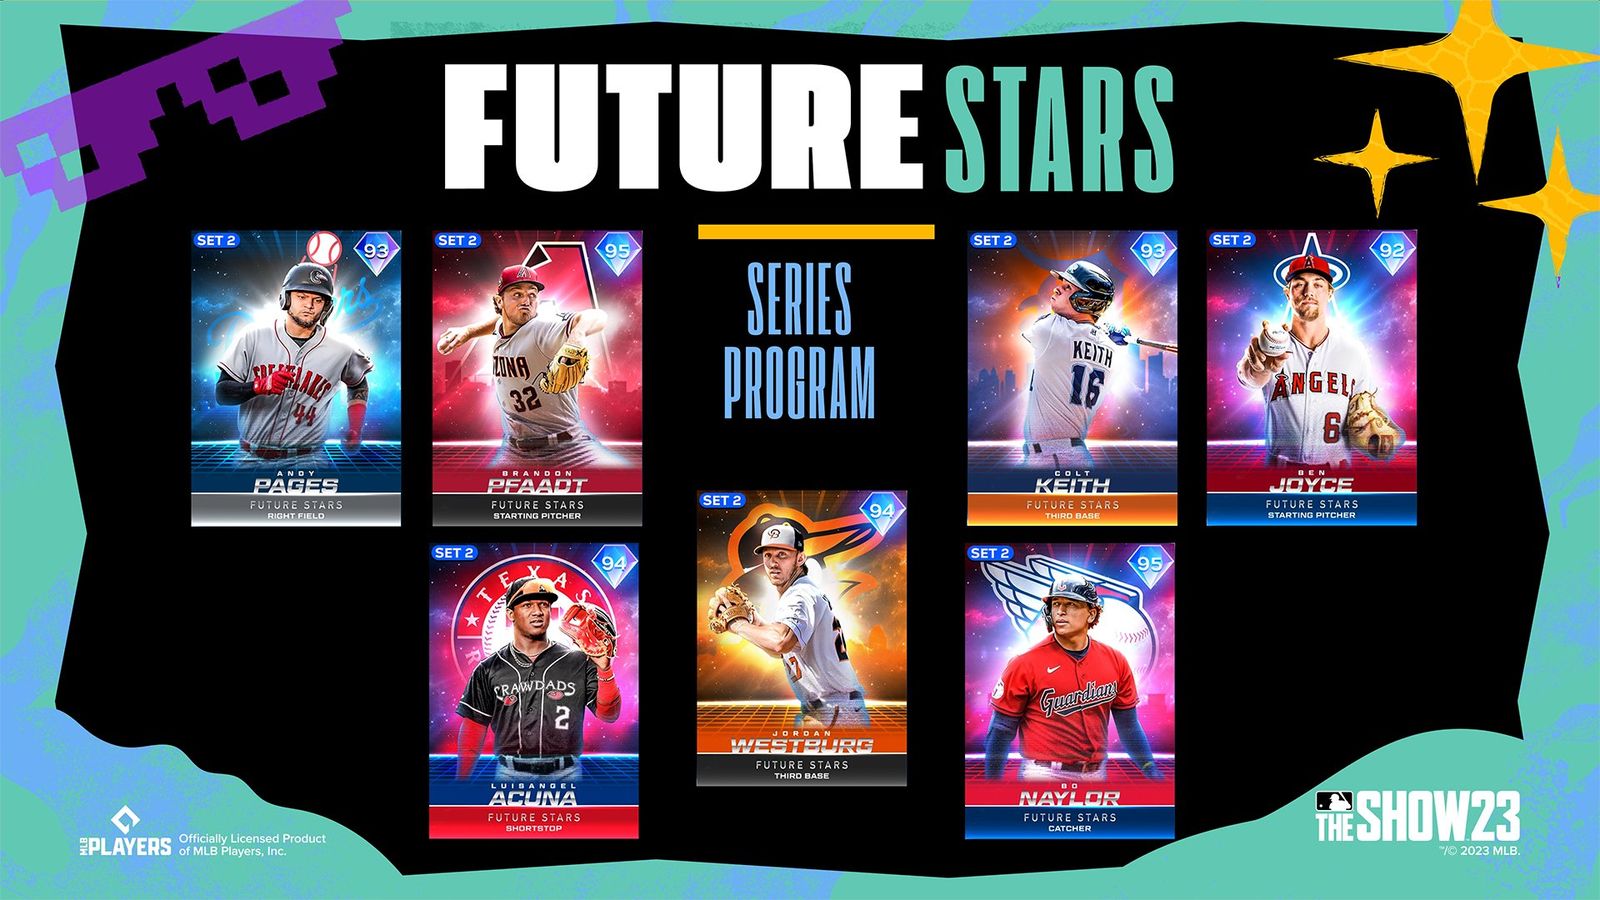 MLB The Show 23 Future Stars Series Program